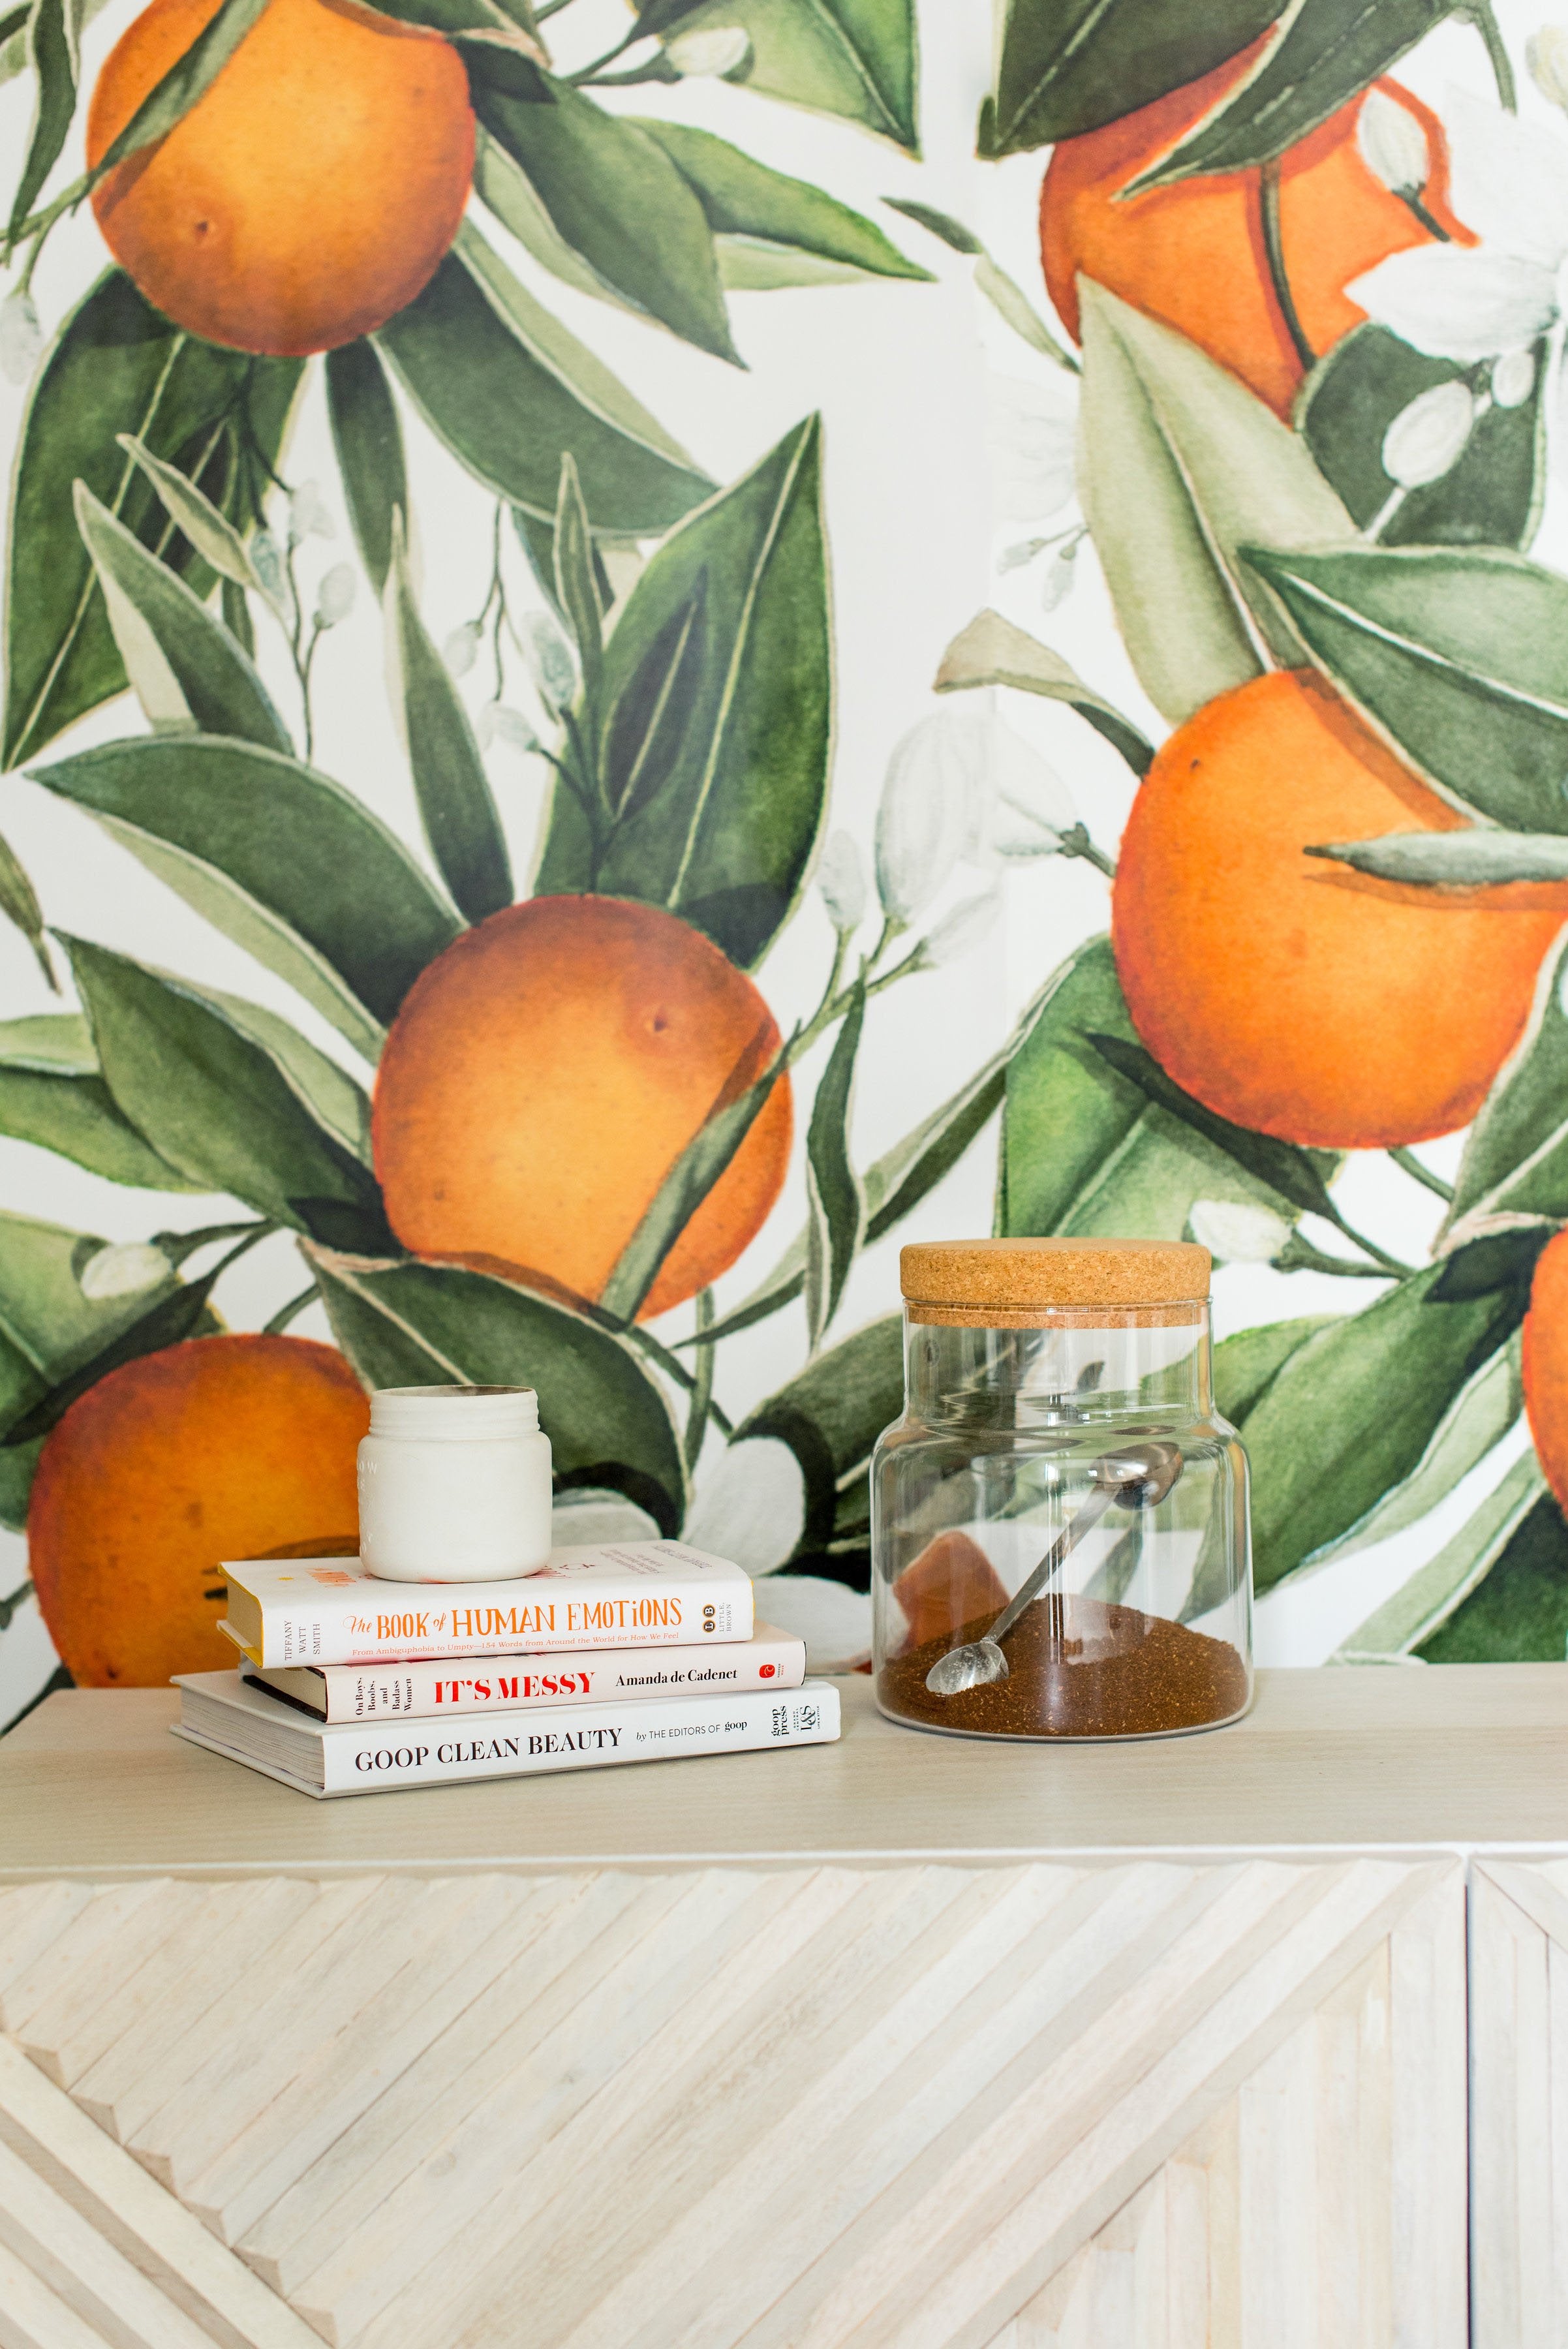 fruit wallpaper